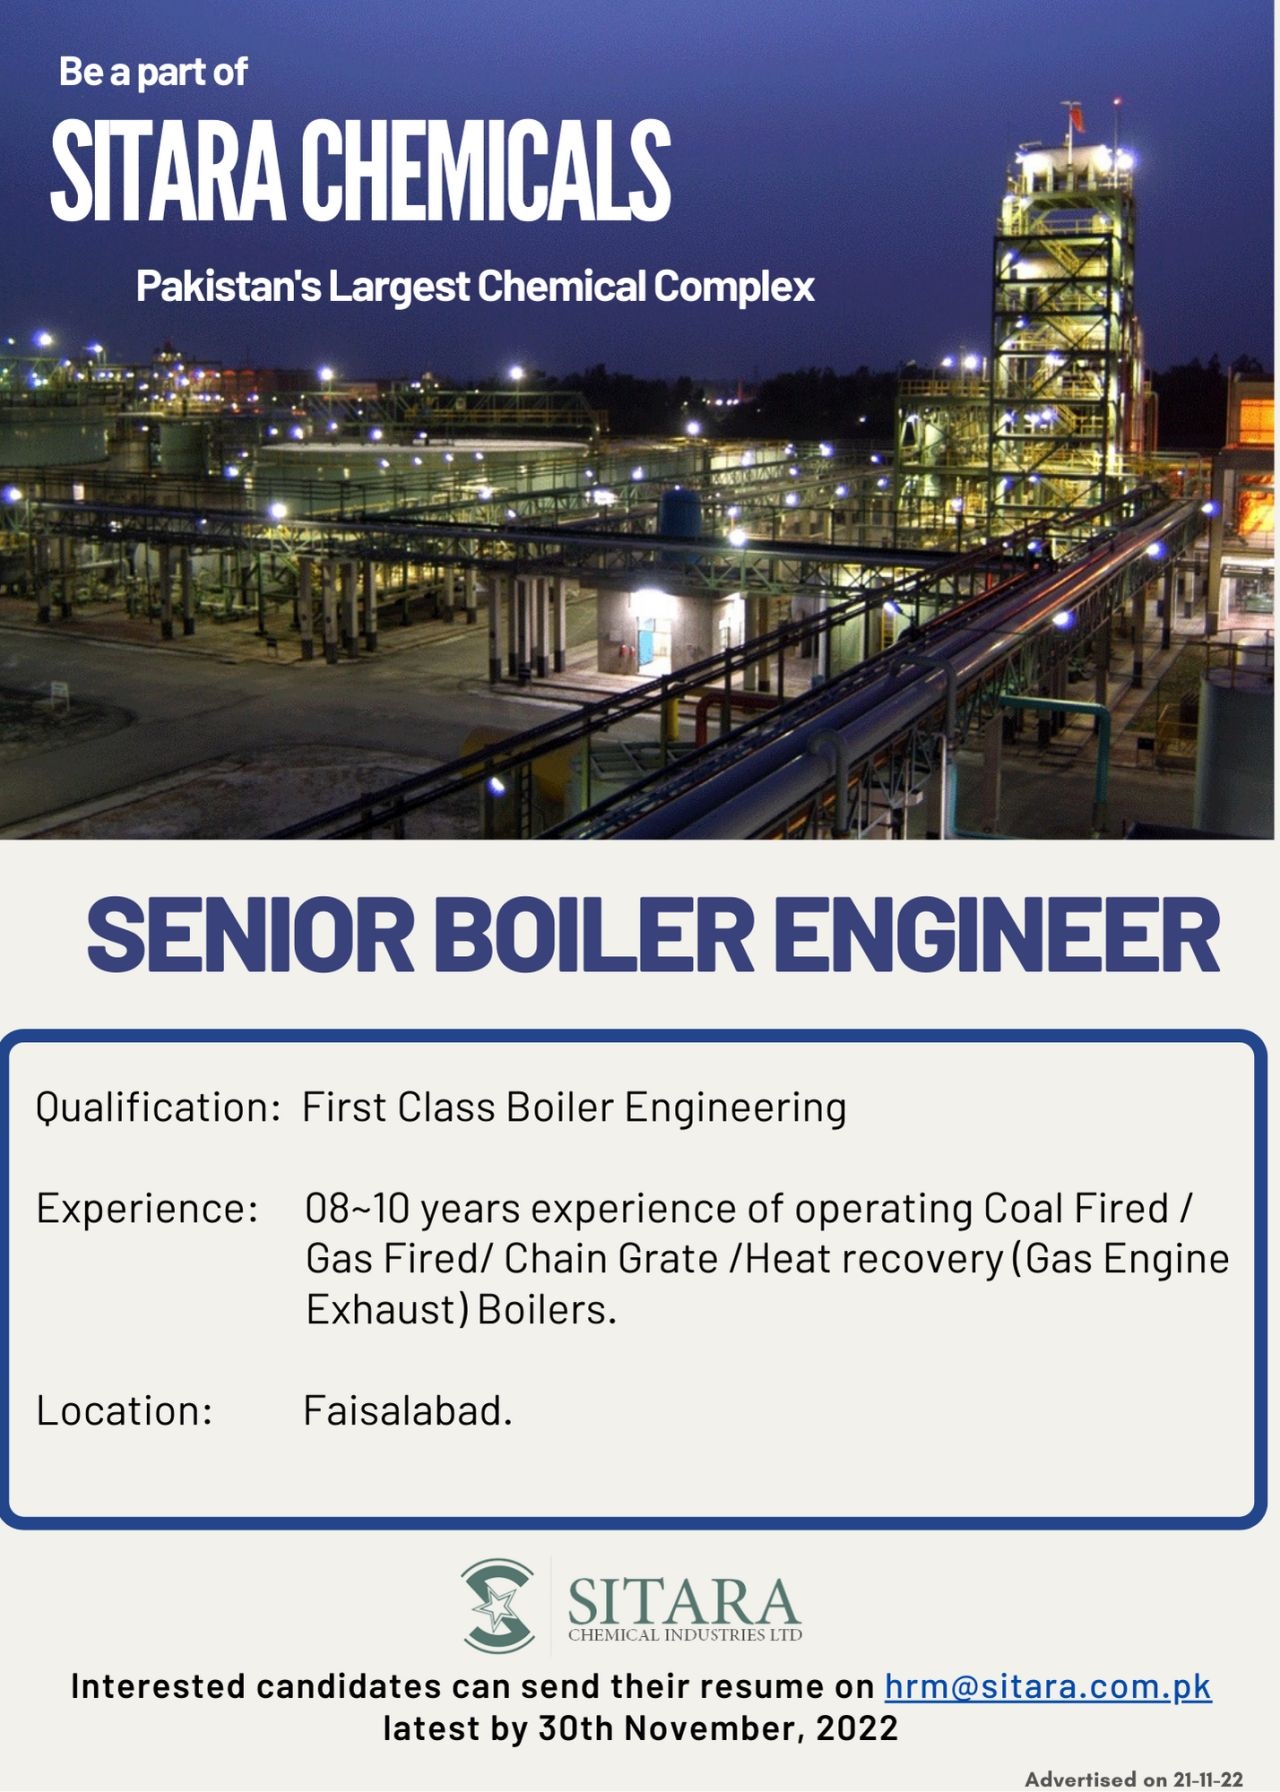 Sitara Chemical Industries Limited Jobs for Senior Boiler Engineer